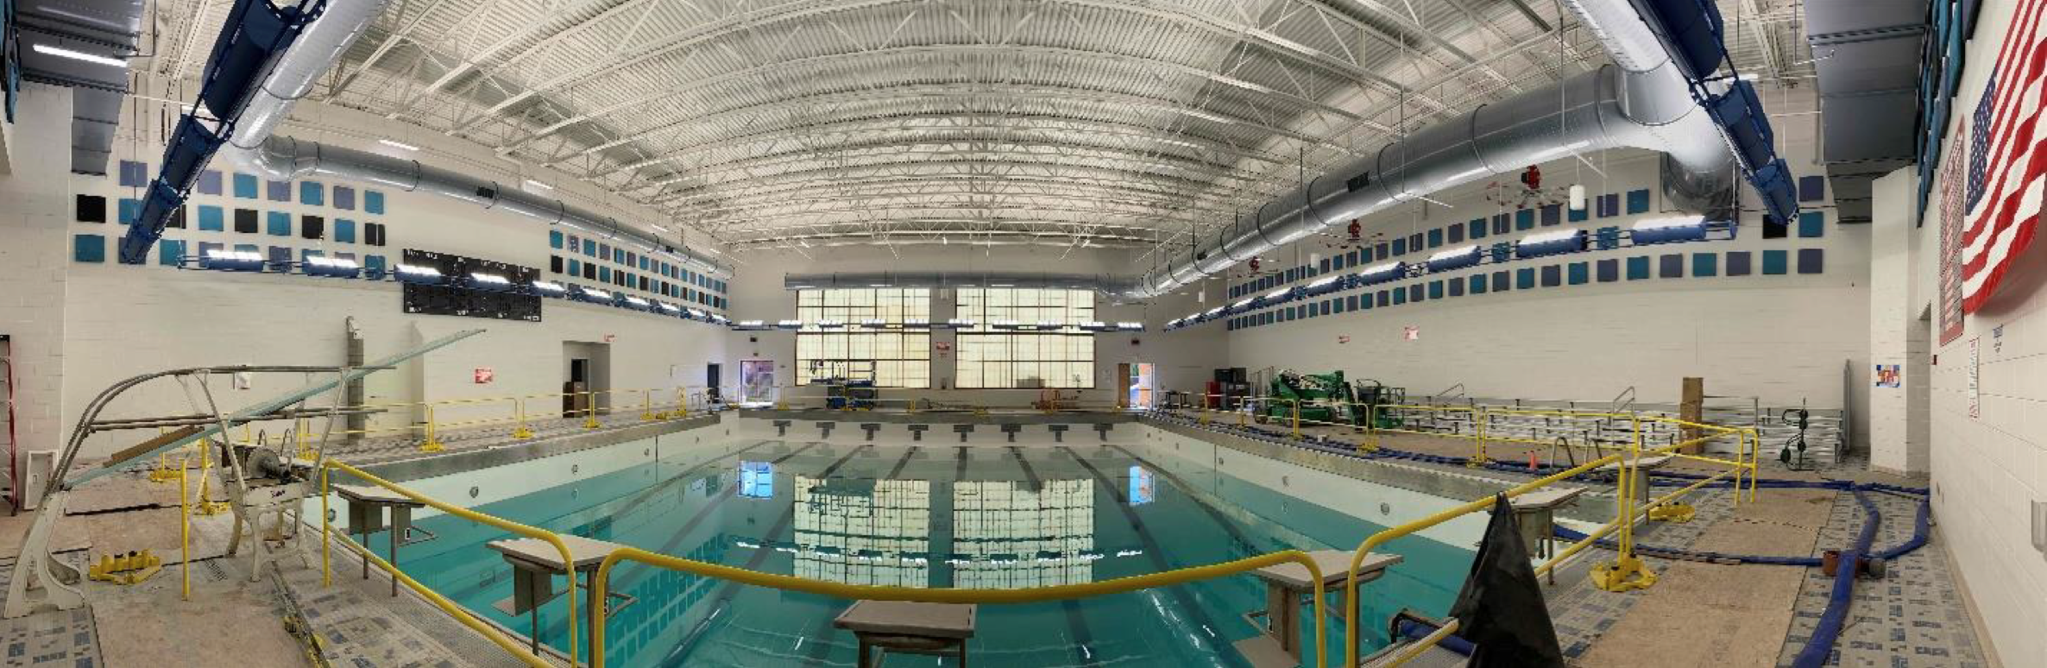 High School pool interior